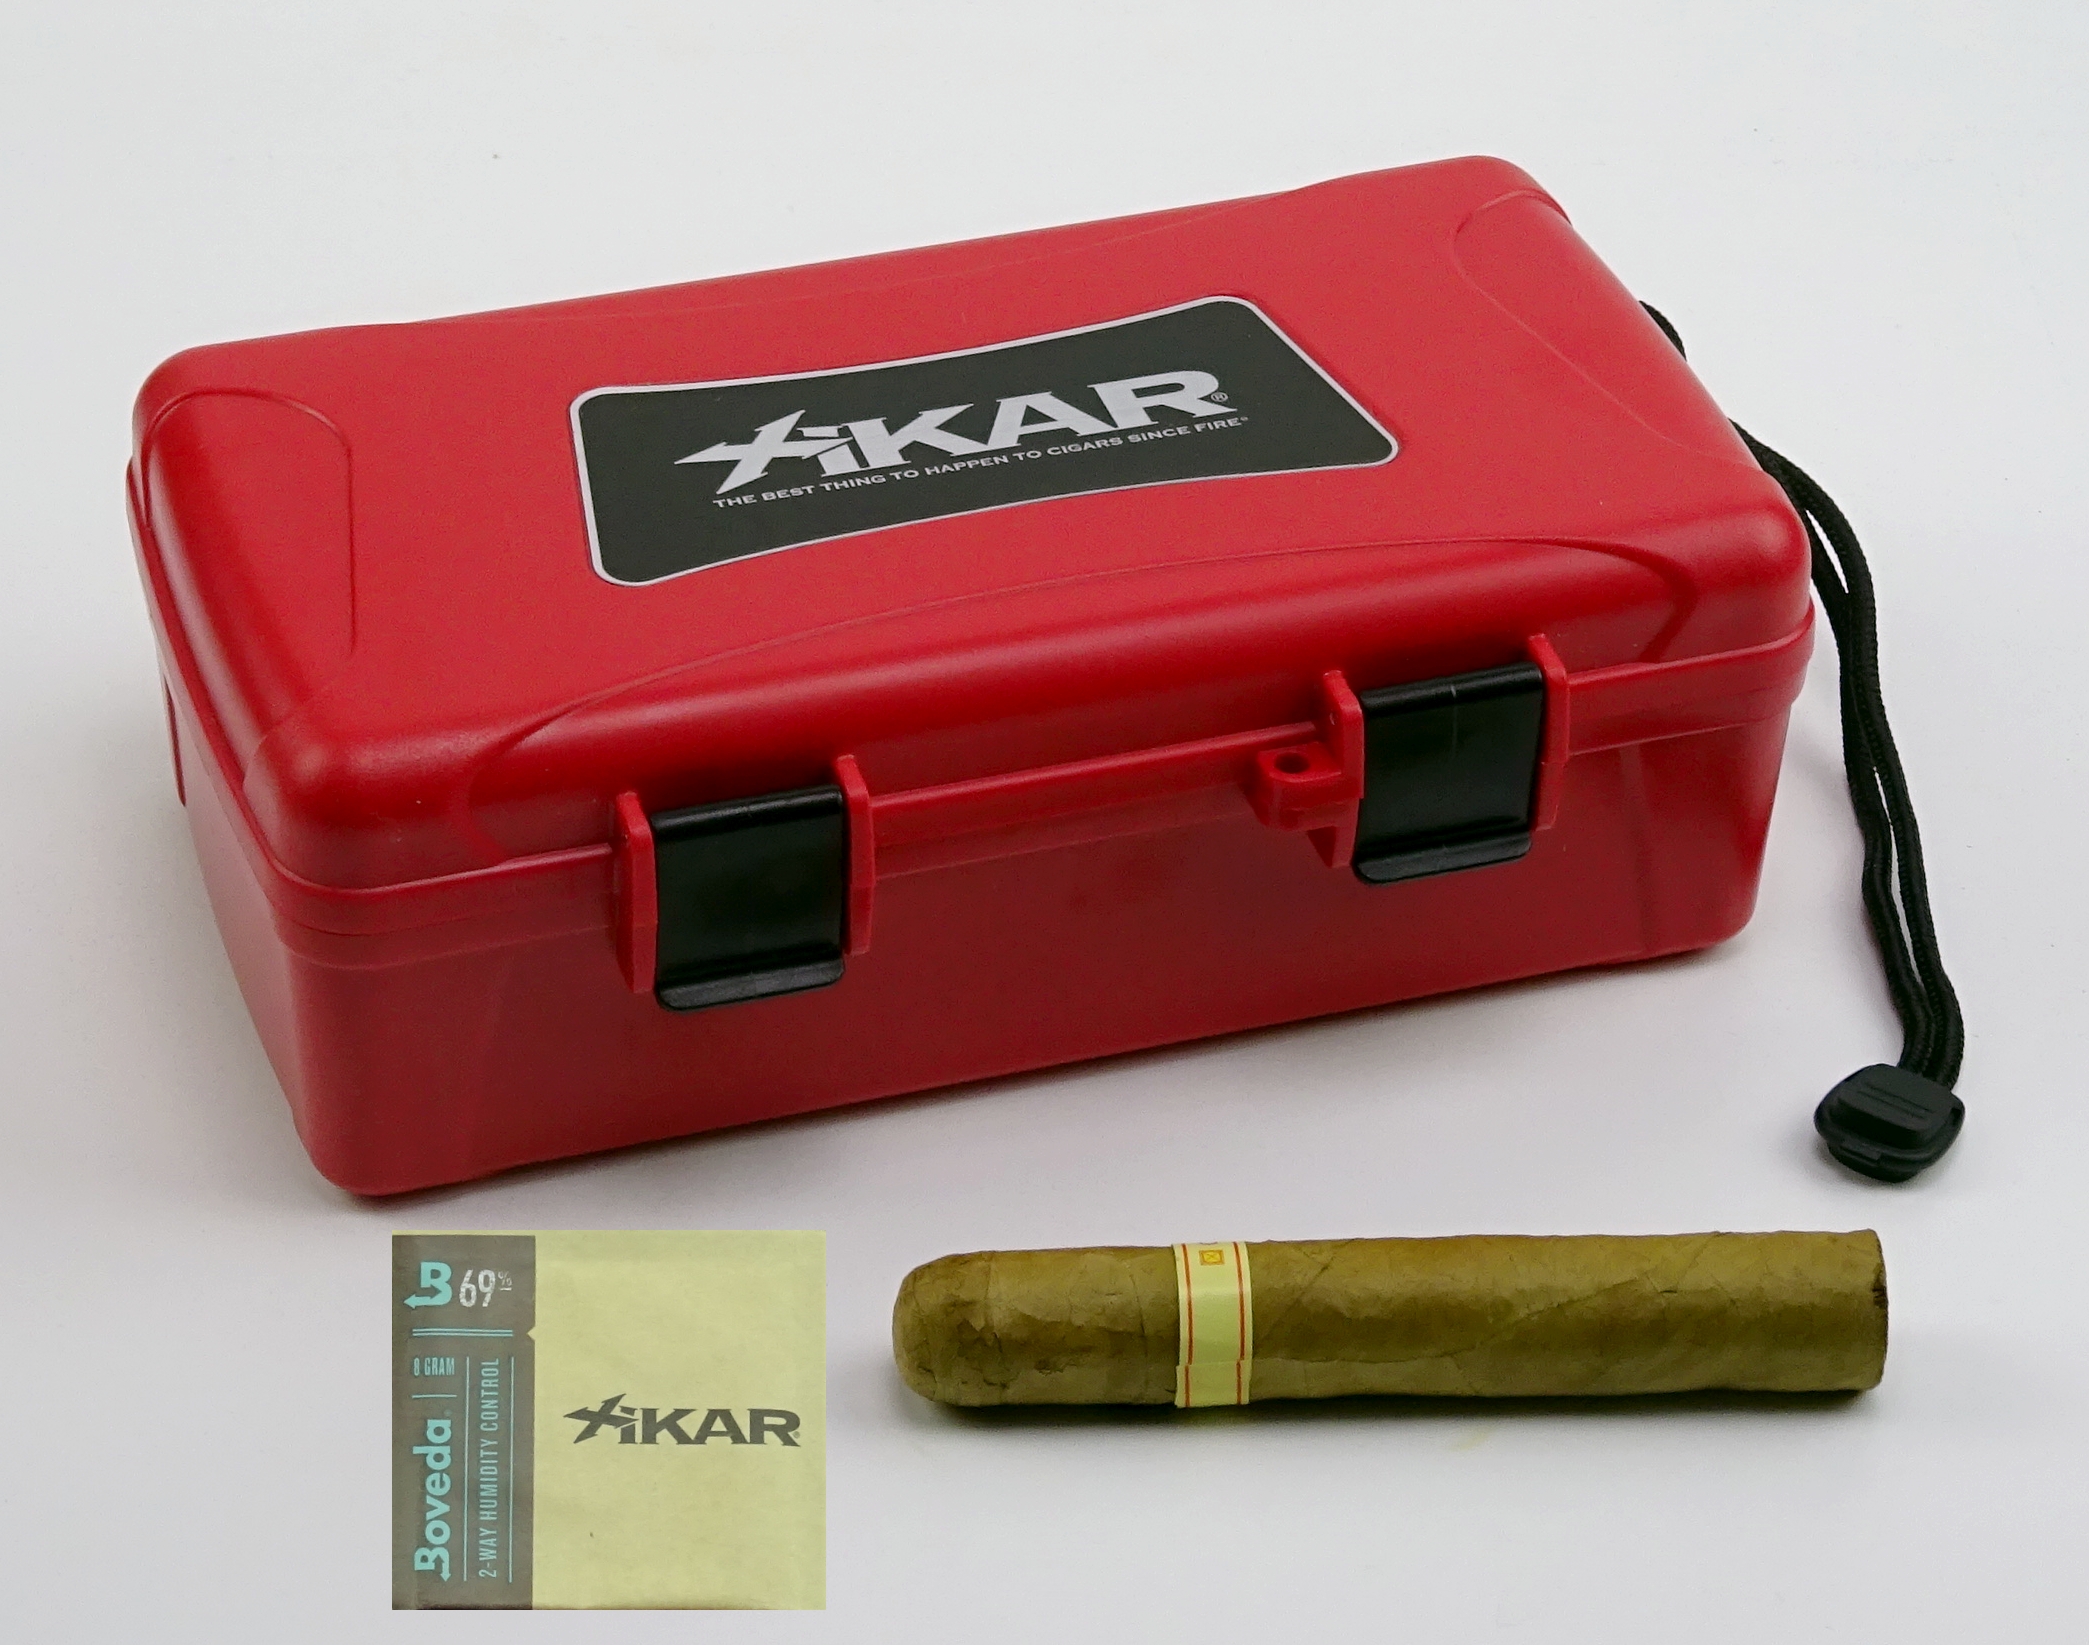 Reisehumidor Xikar 1210xi ABS schwarz 10 Zigarren mit Xikar-Boveda-Befeuchter